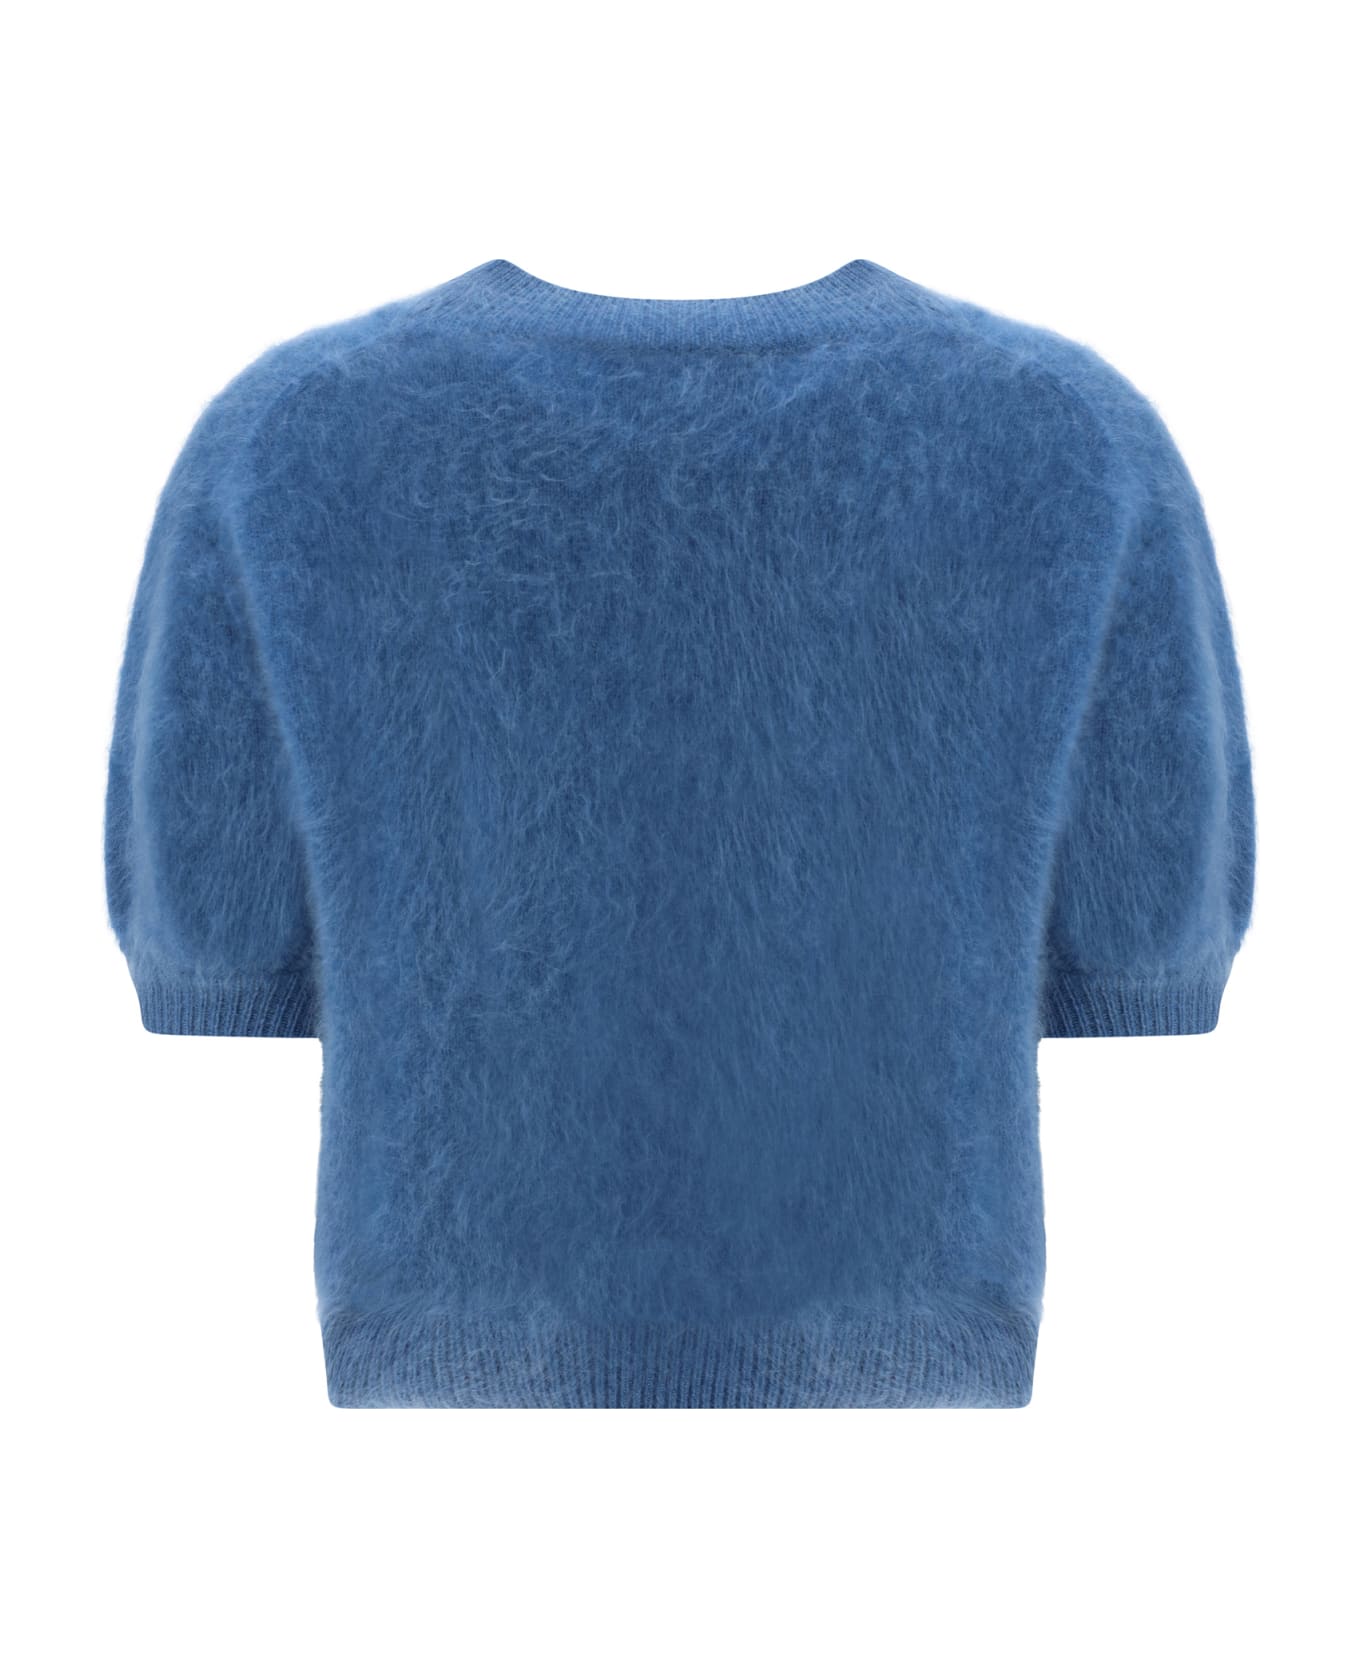 Lisa Yang Juniper Sweater - Stormy Blue Brushed